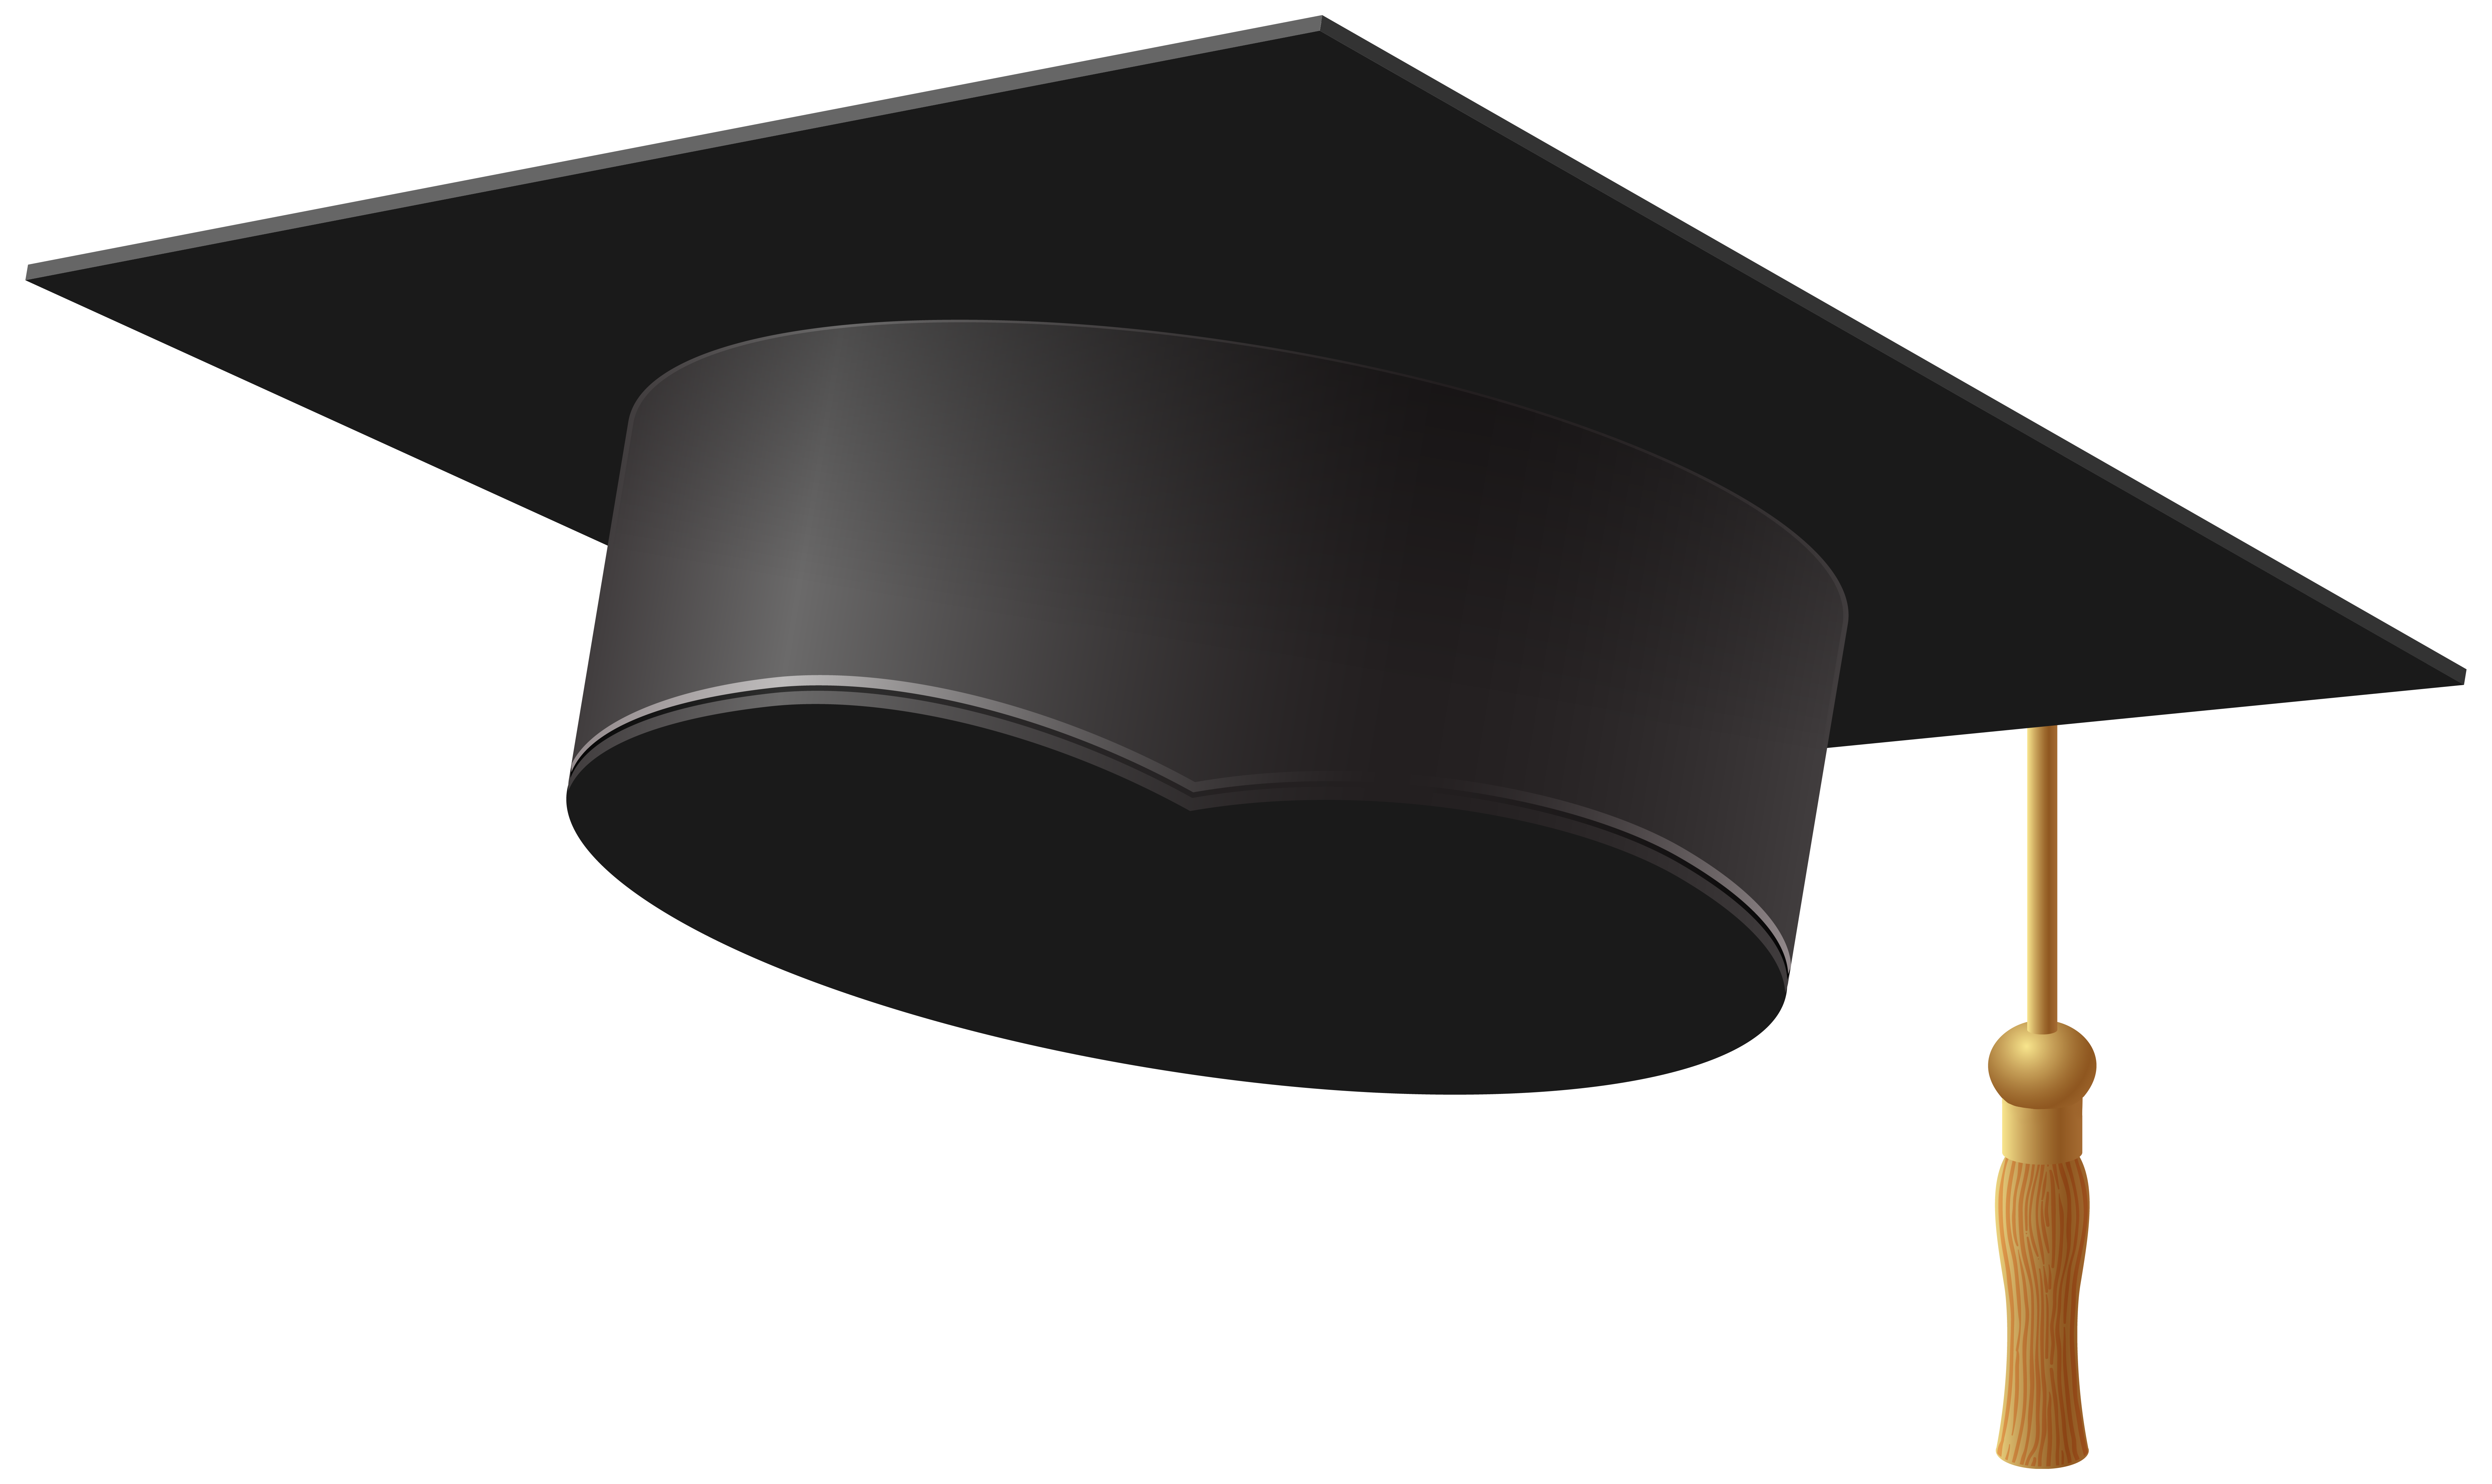 Graduation Hat Clipart · Gra